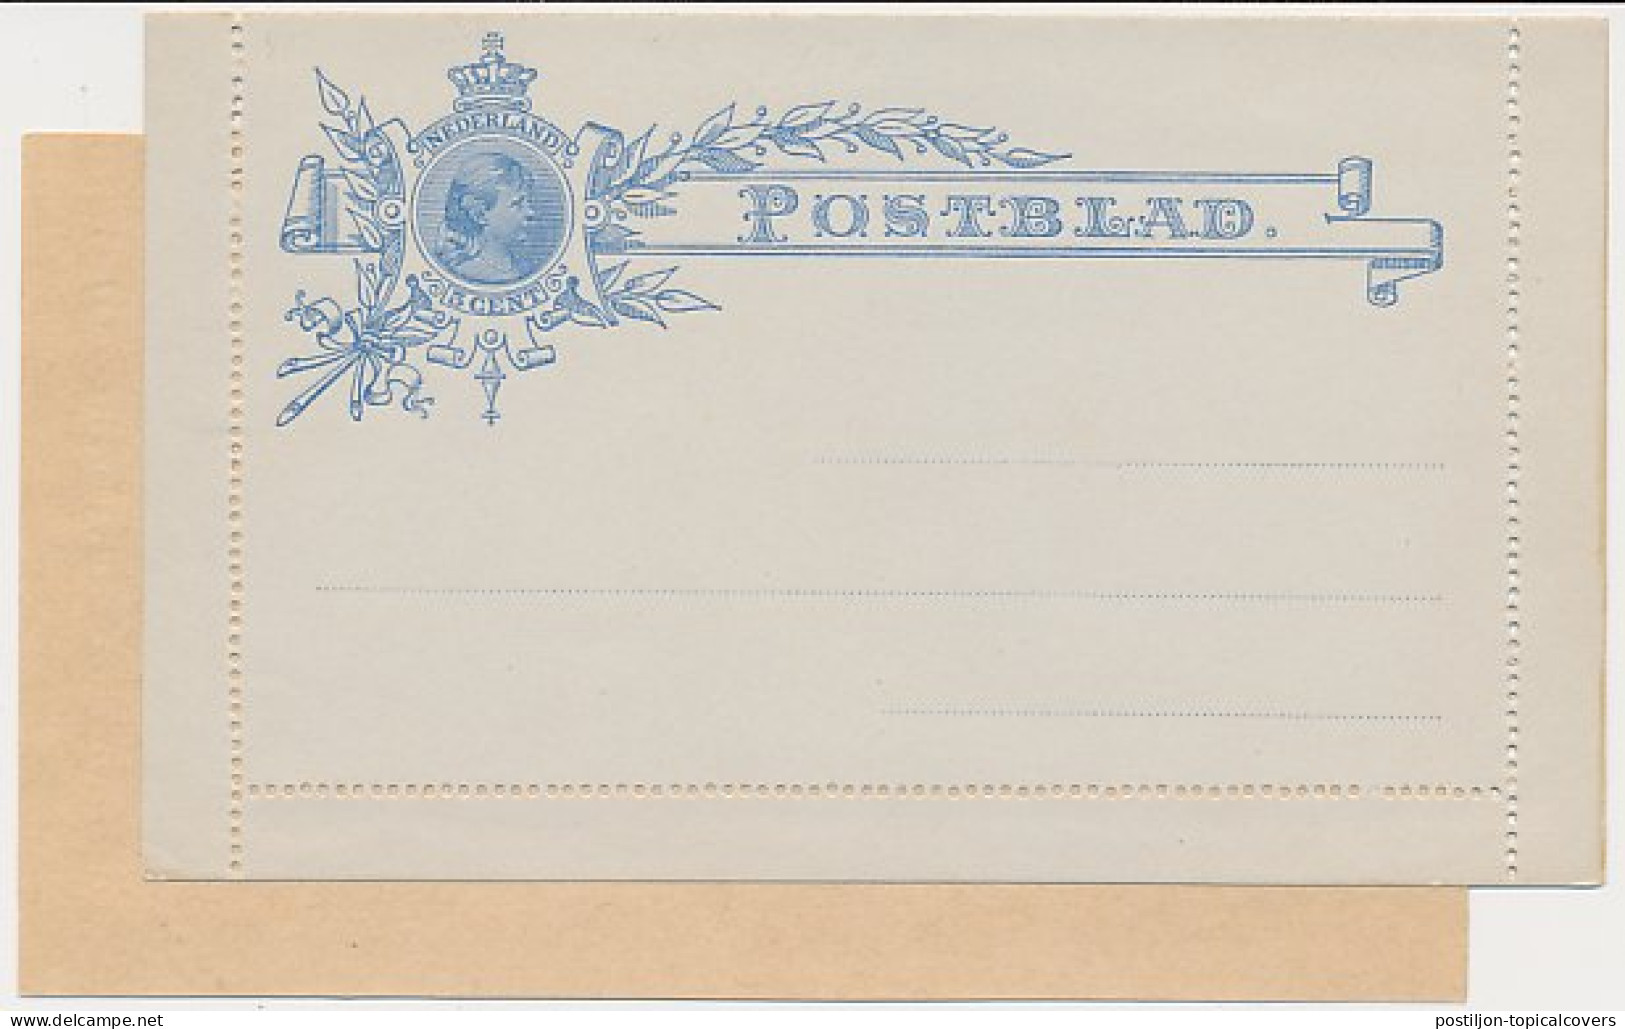 Postblad G. 5 Y - Met Schutblaadje - Postal Stationery